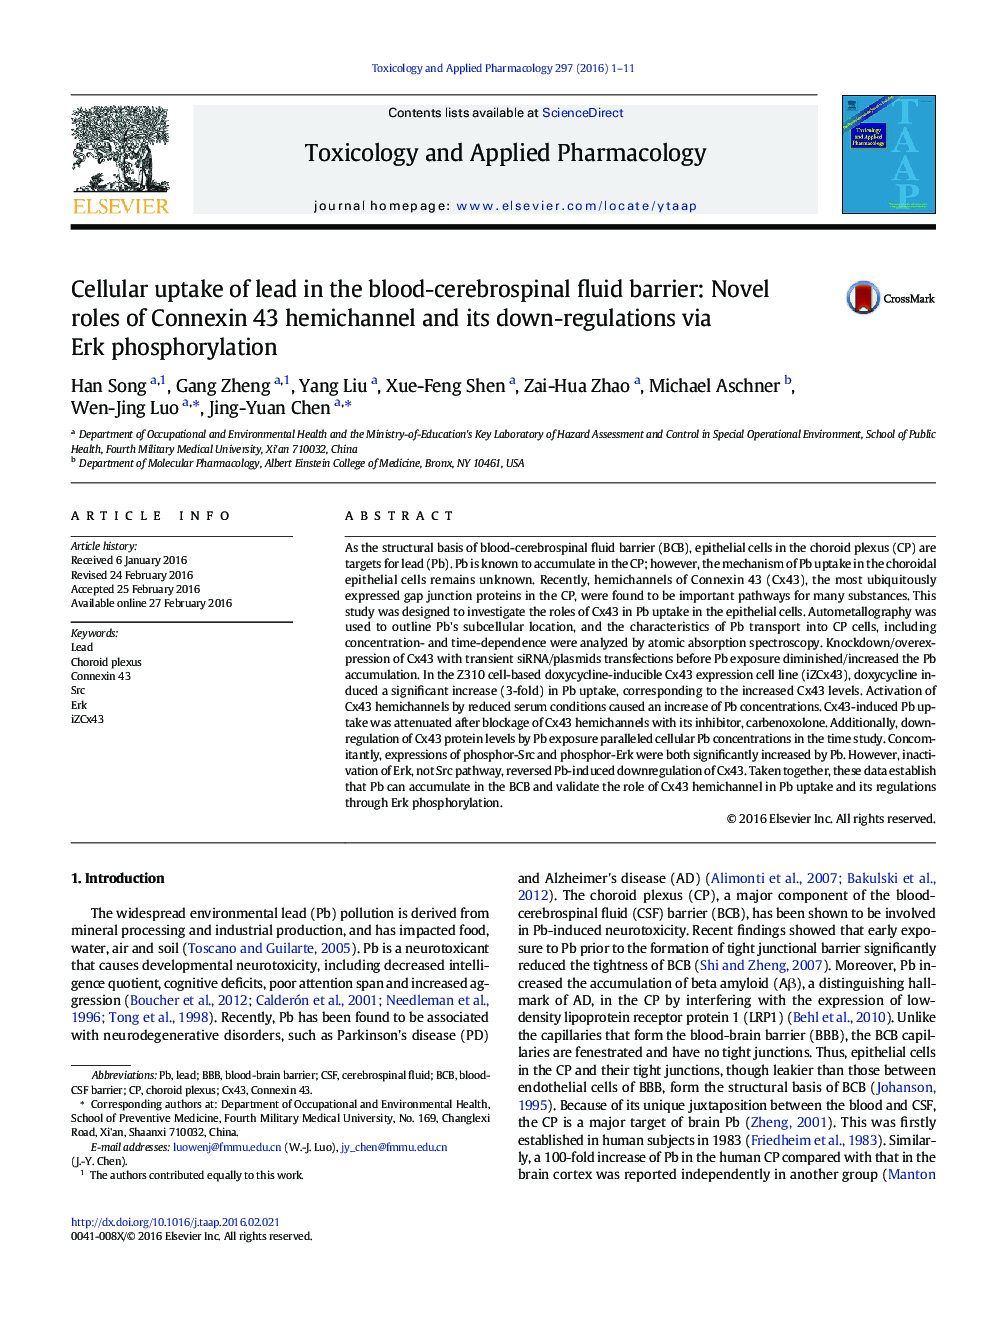 Cellular uptake of lead in the blood-cerebrospinal fluid barrier: Novel roles of Connexin 43 hemichannel and its down-regulations via Erk phosphorylation